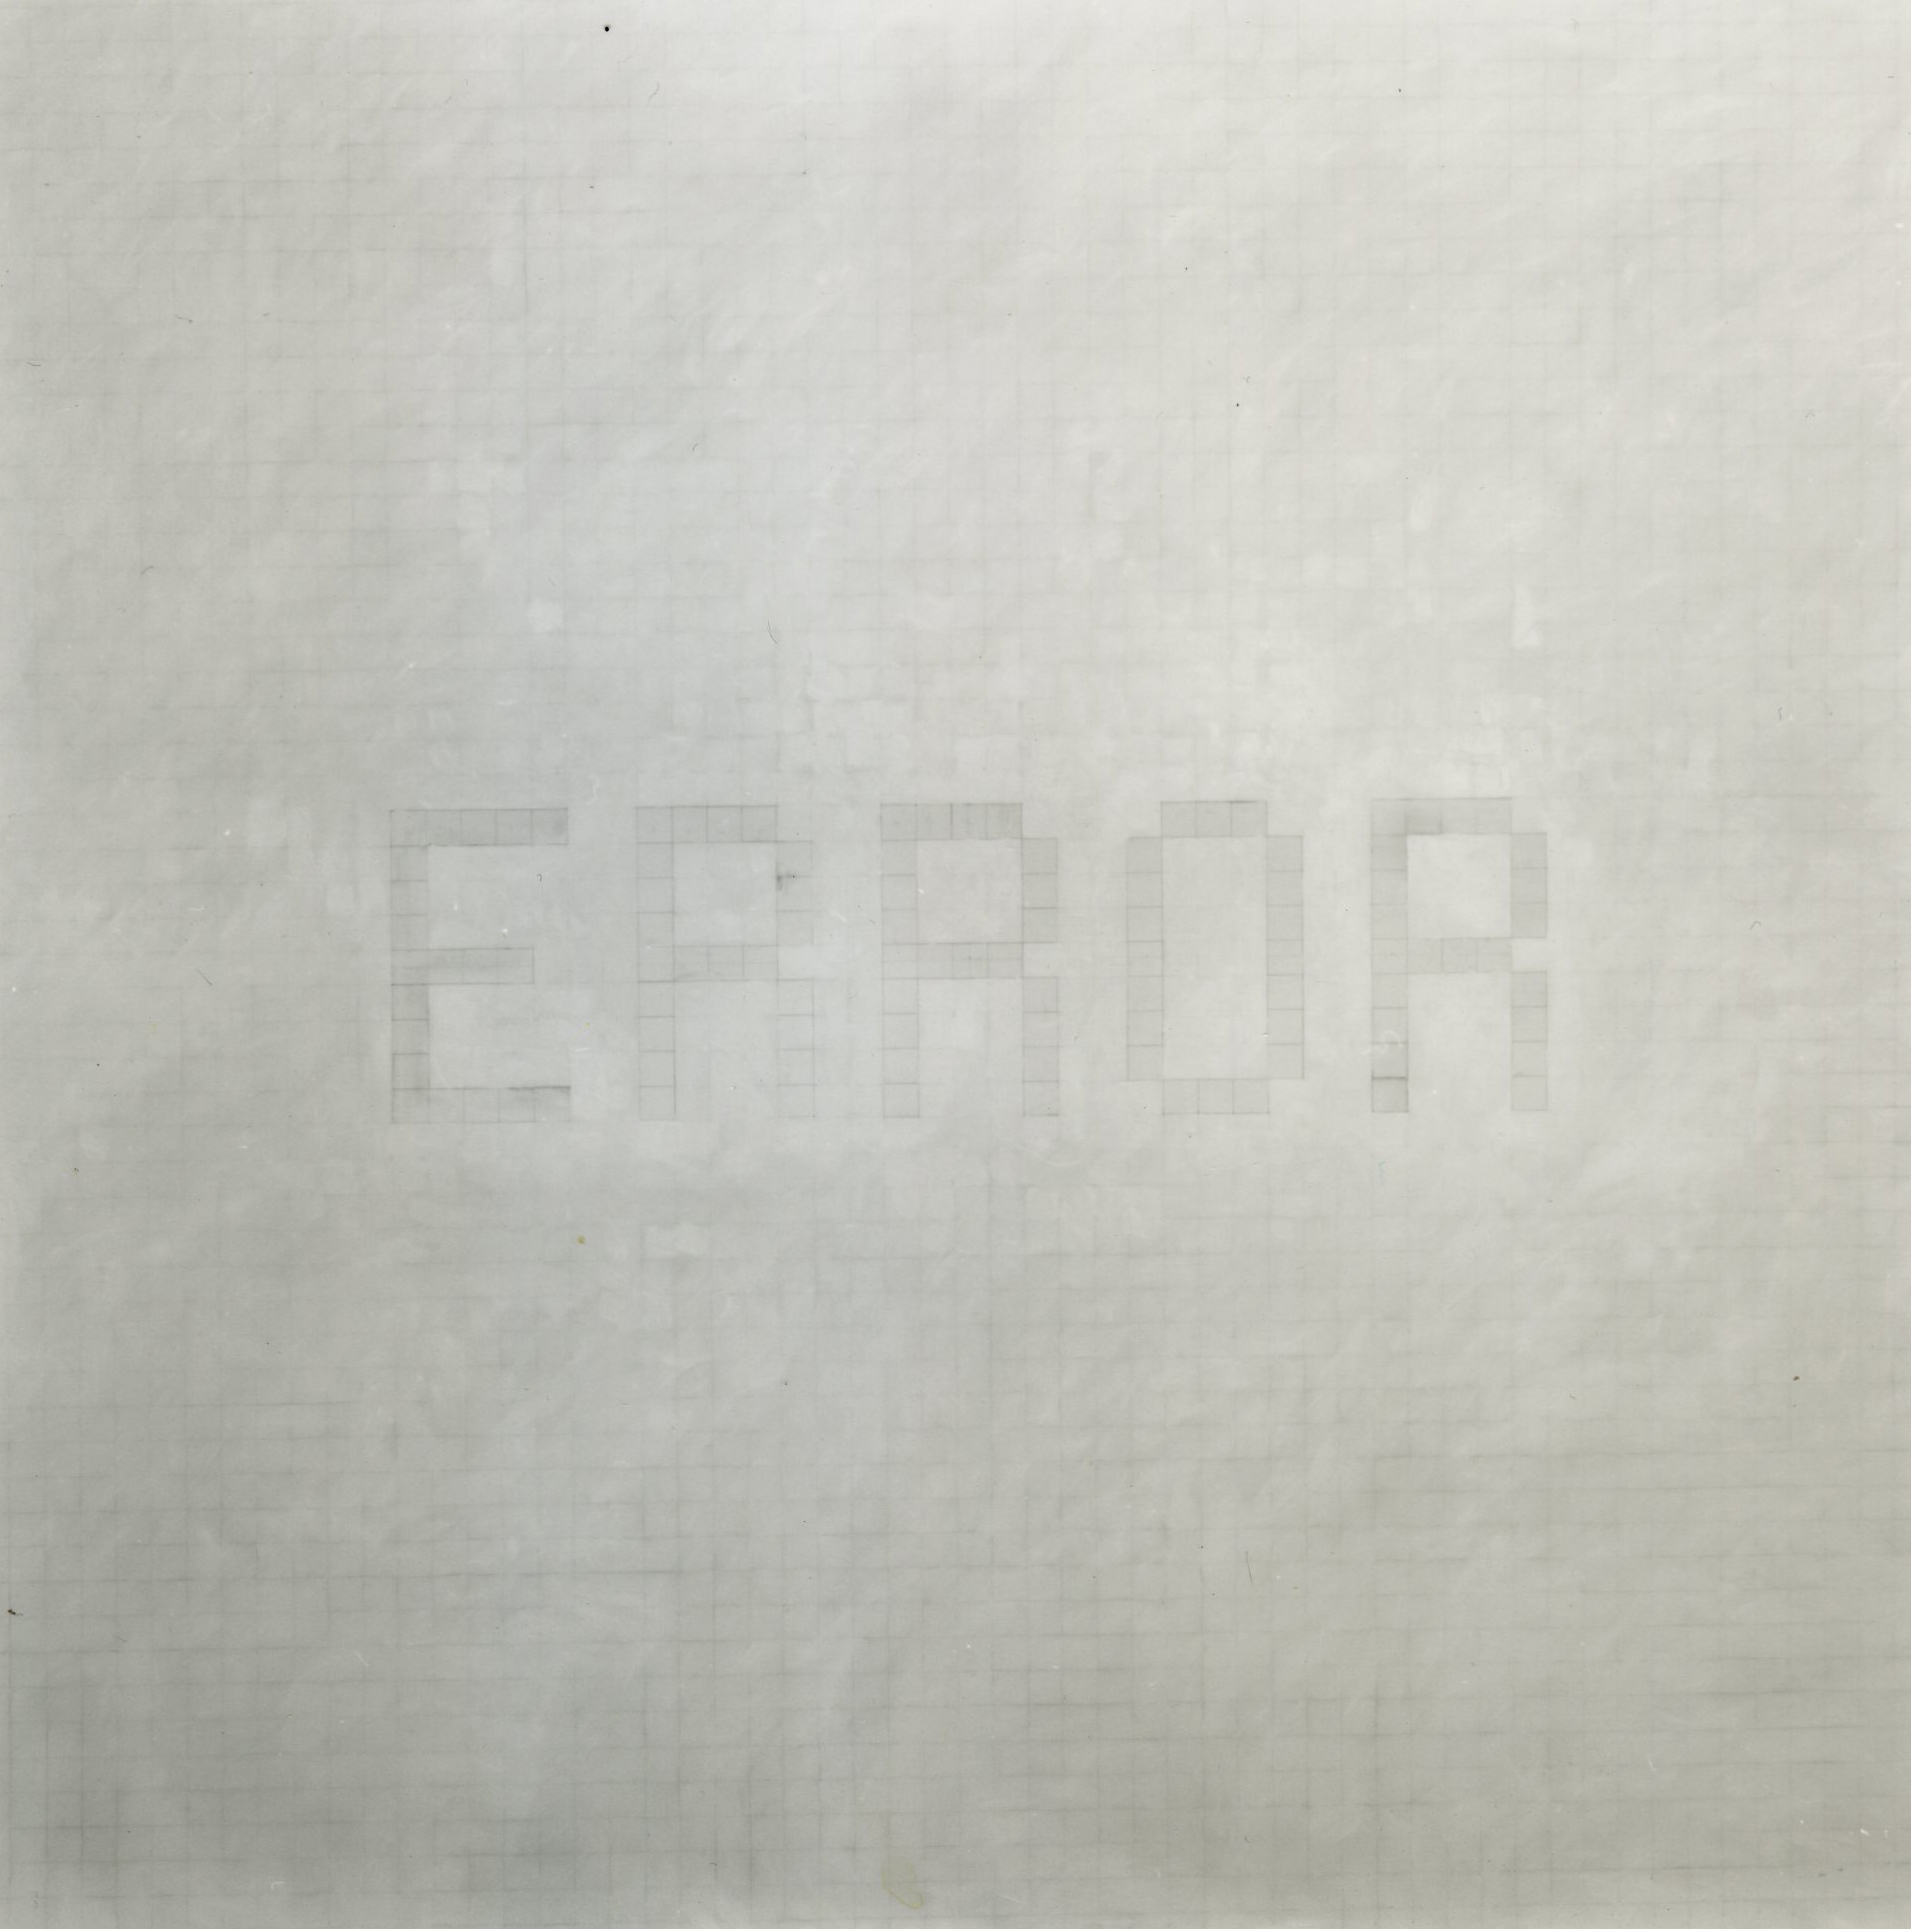 Luca Pancrazzi, Error, 2000, pencil on paper, 200×200 cm